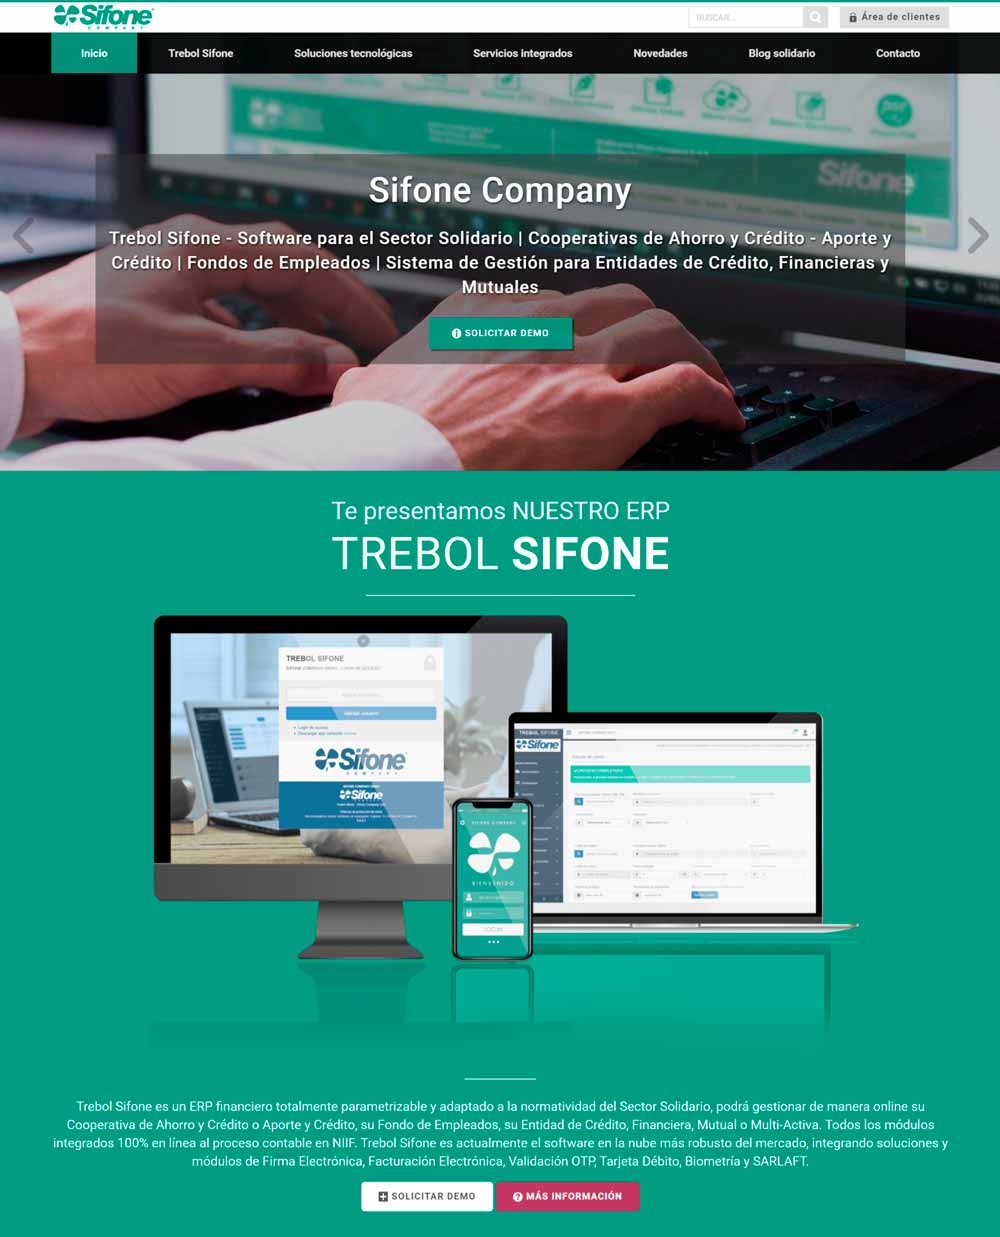 Sifone Company - Transformando Tu Negocio